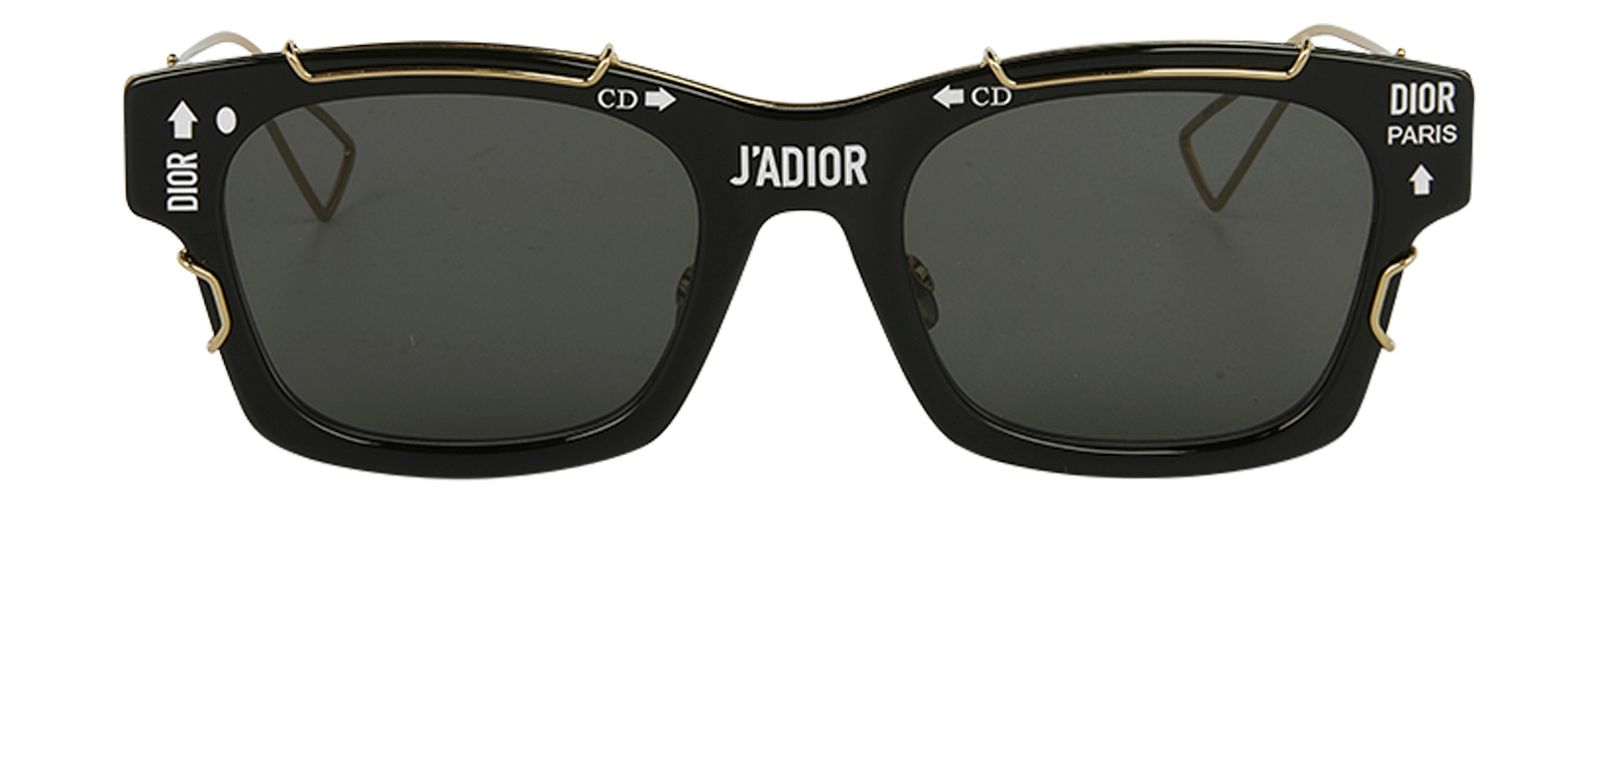 Sunglasses J'Adior Black Gold Dior Avvenice | electricmall.com.ng